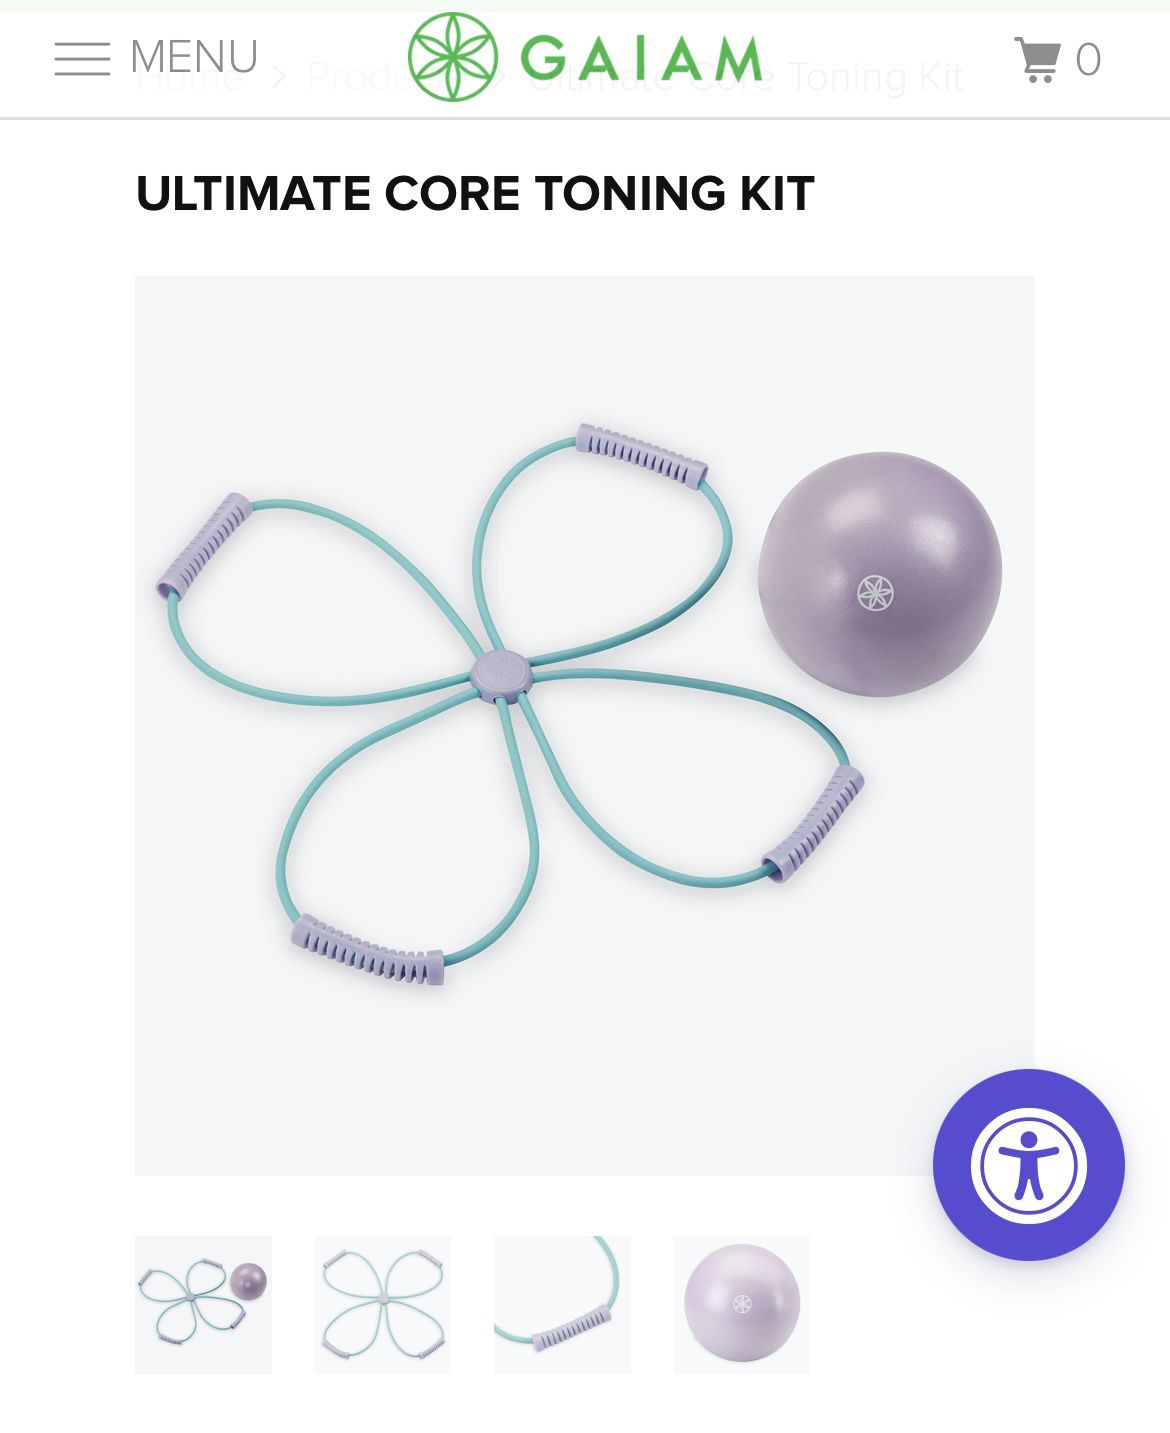 Gaiam Ultimate Core Toning Kit—brand new